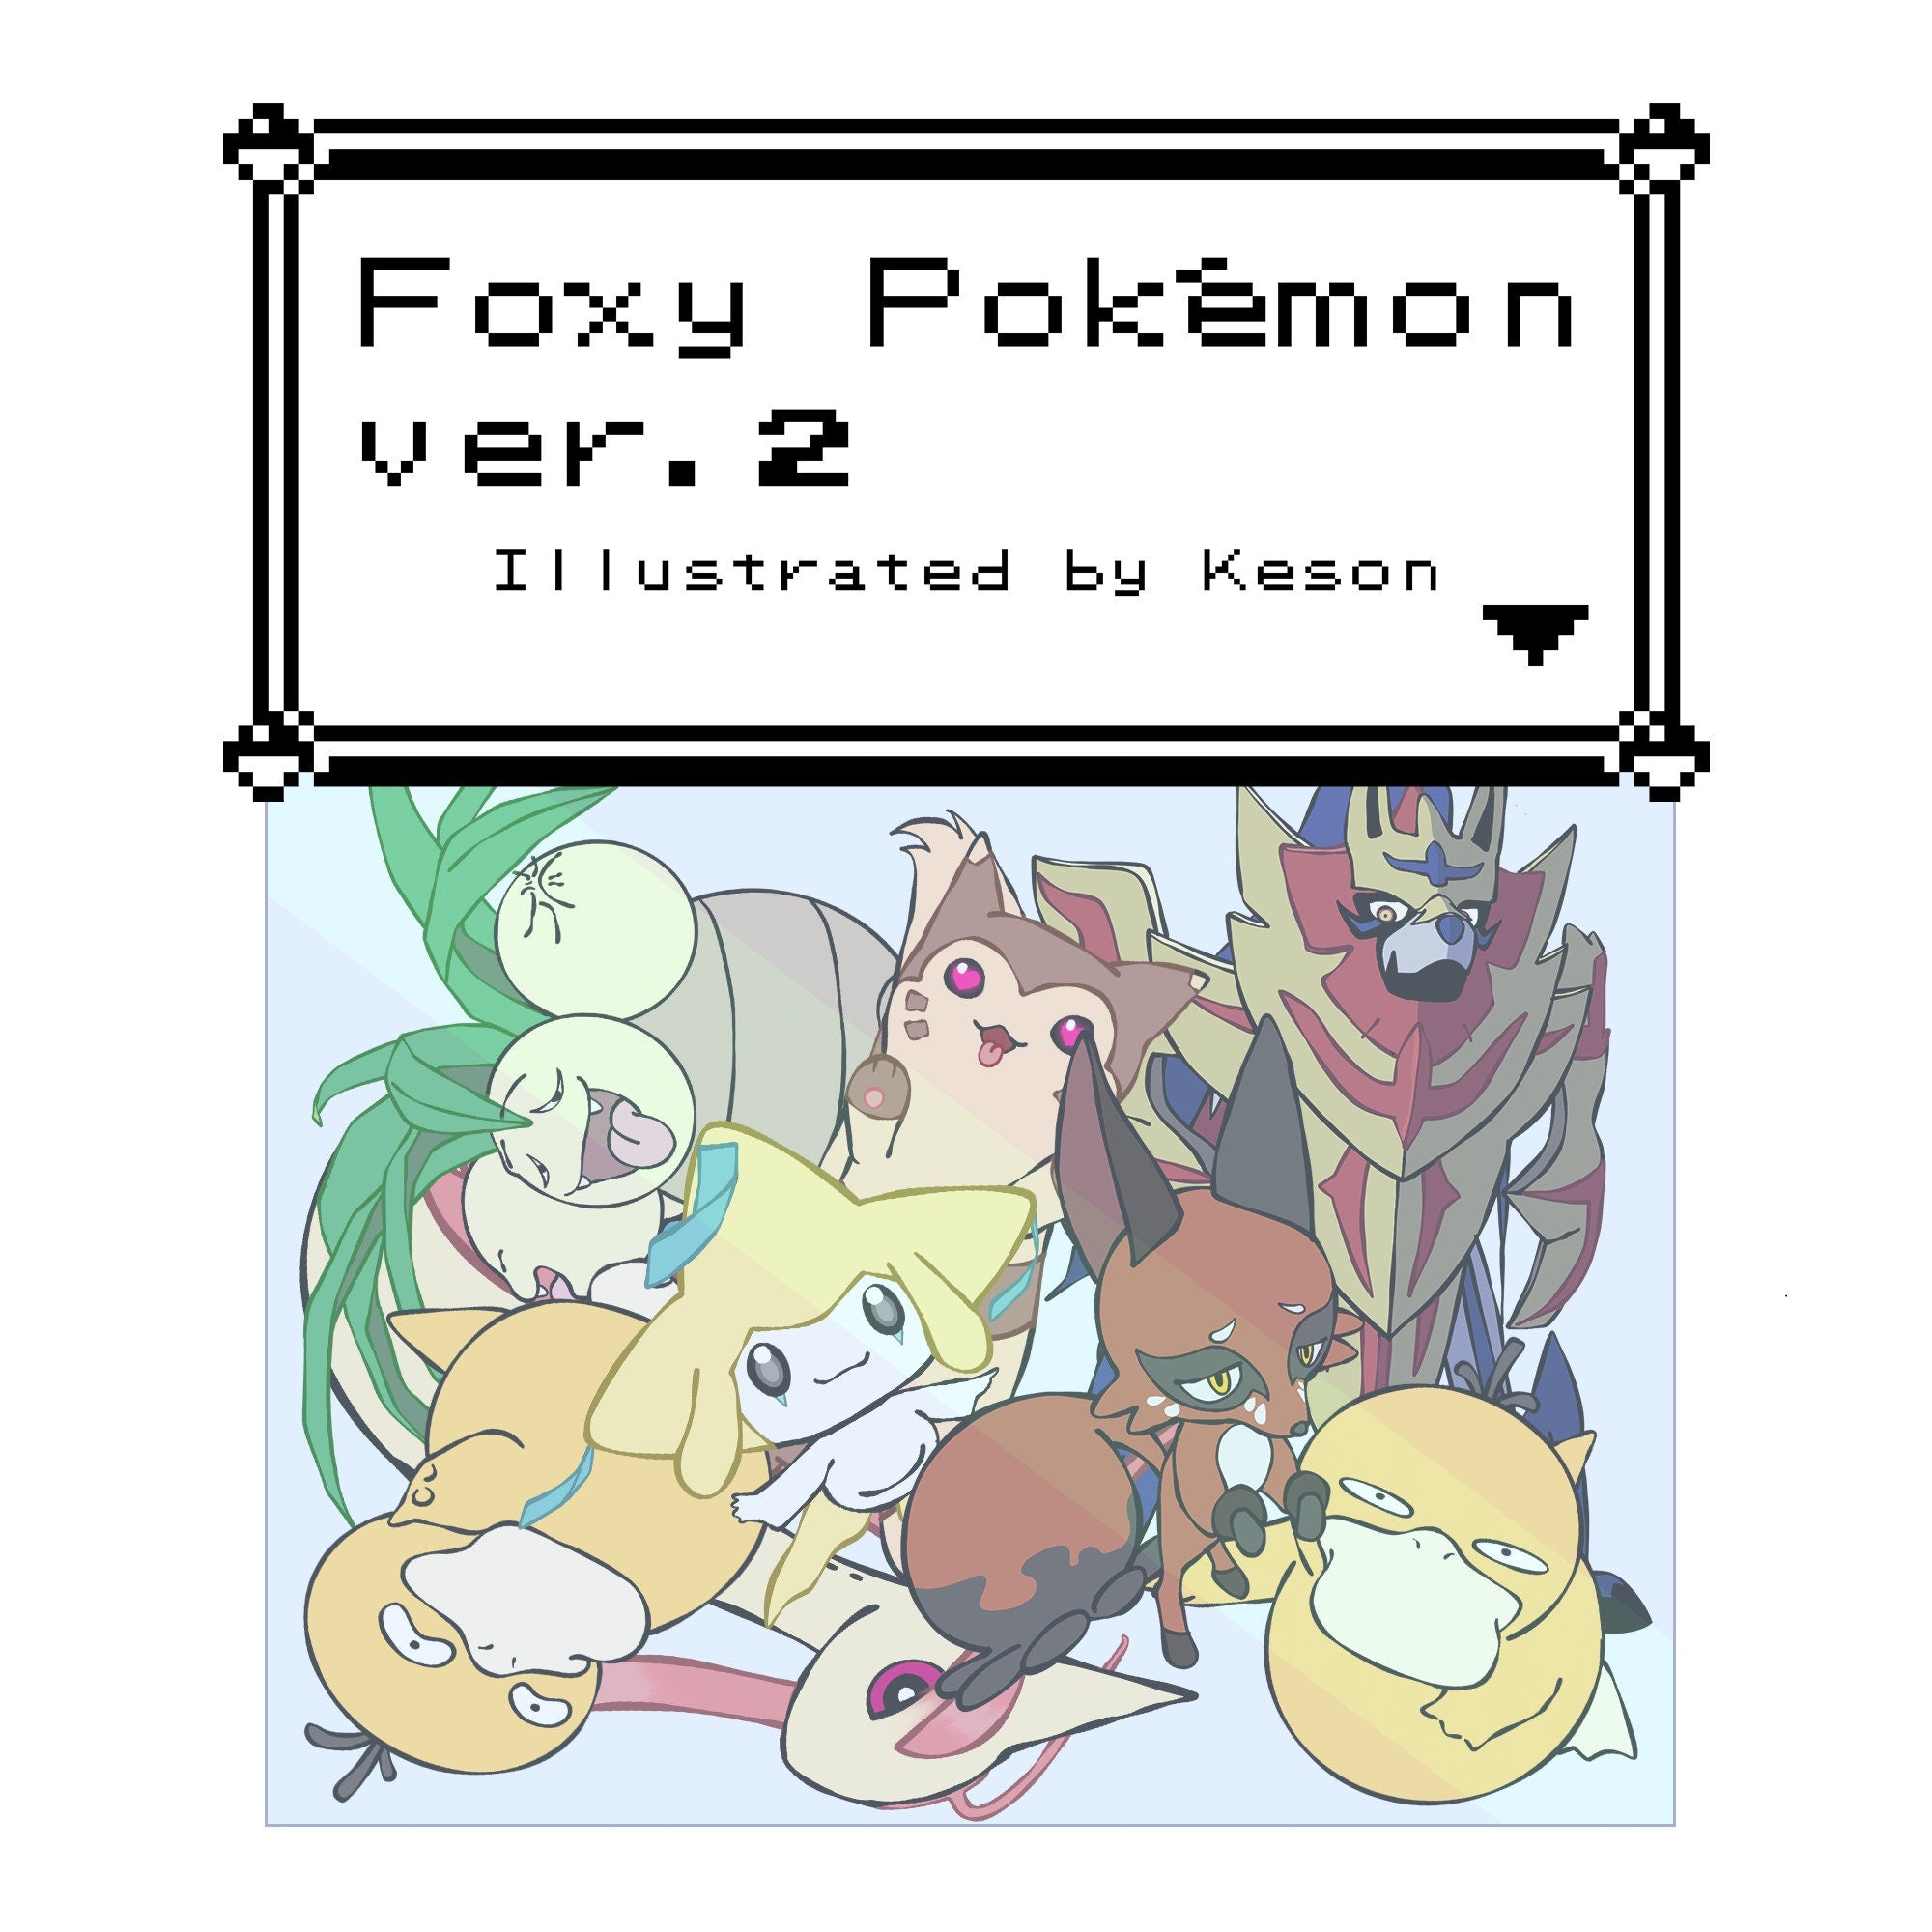 [Keson]Foxy Pokémon sticker pack - Ver. 2